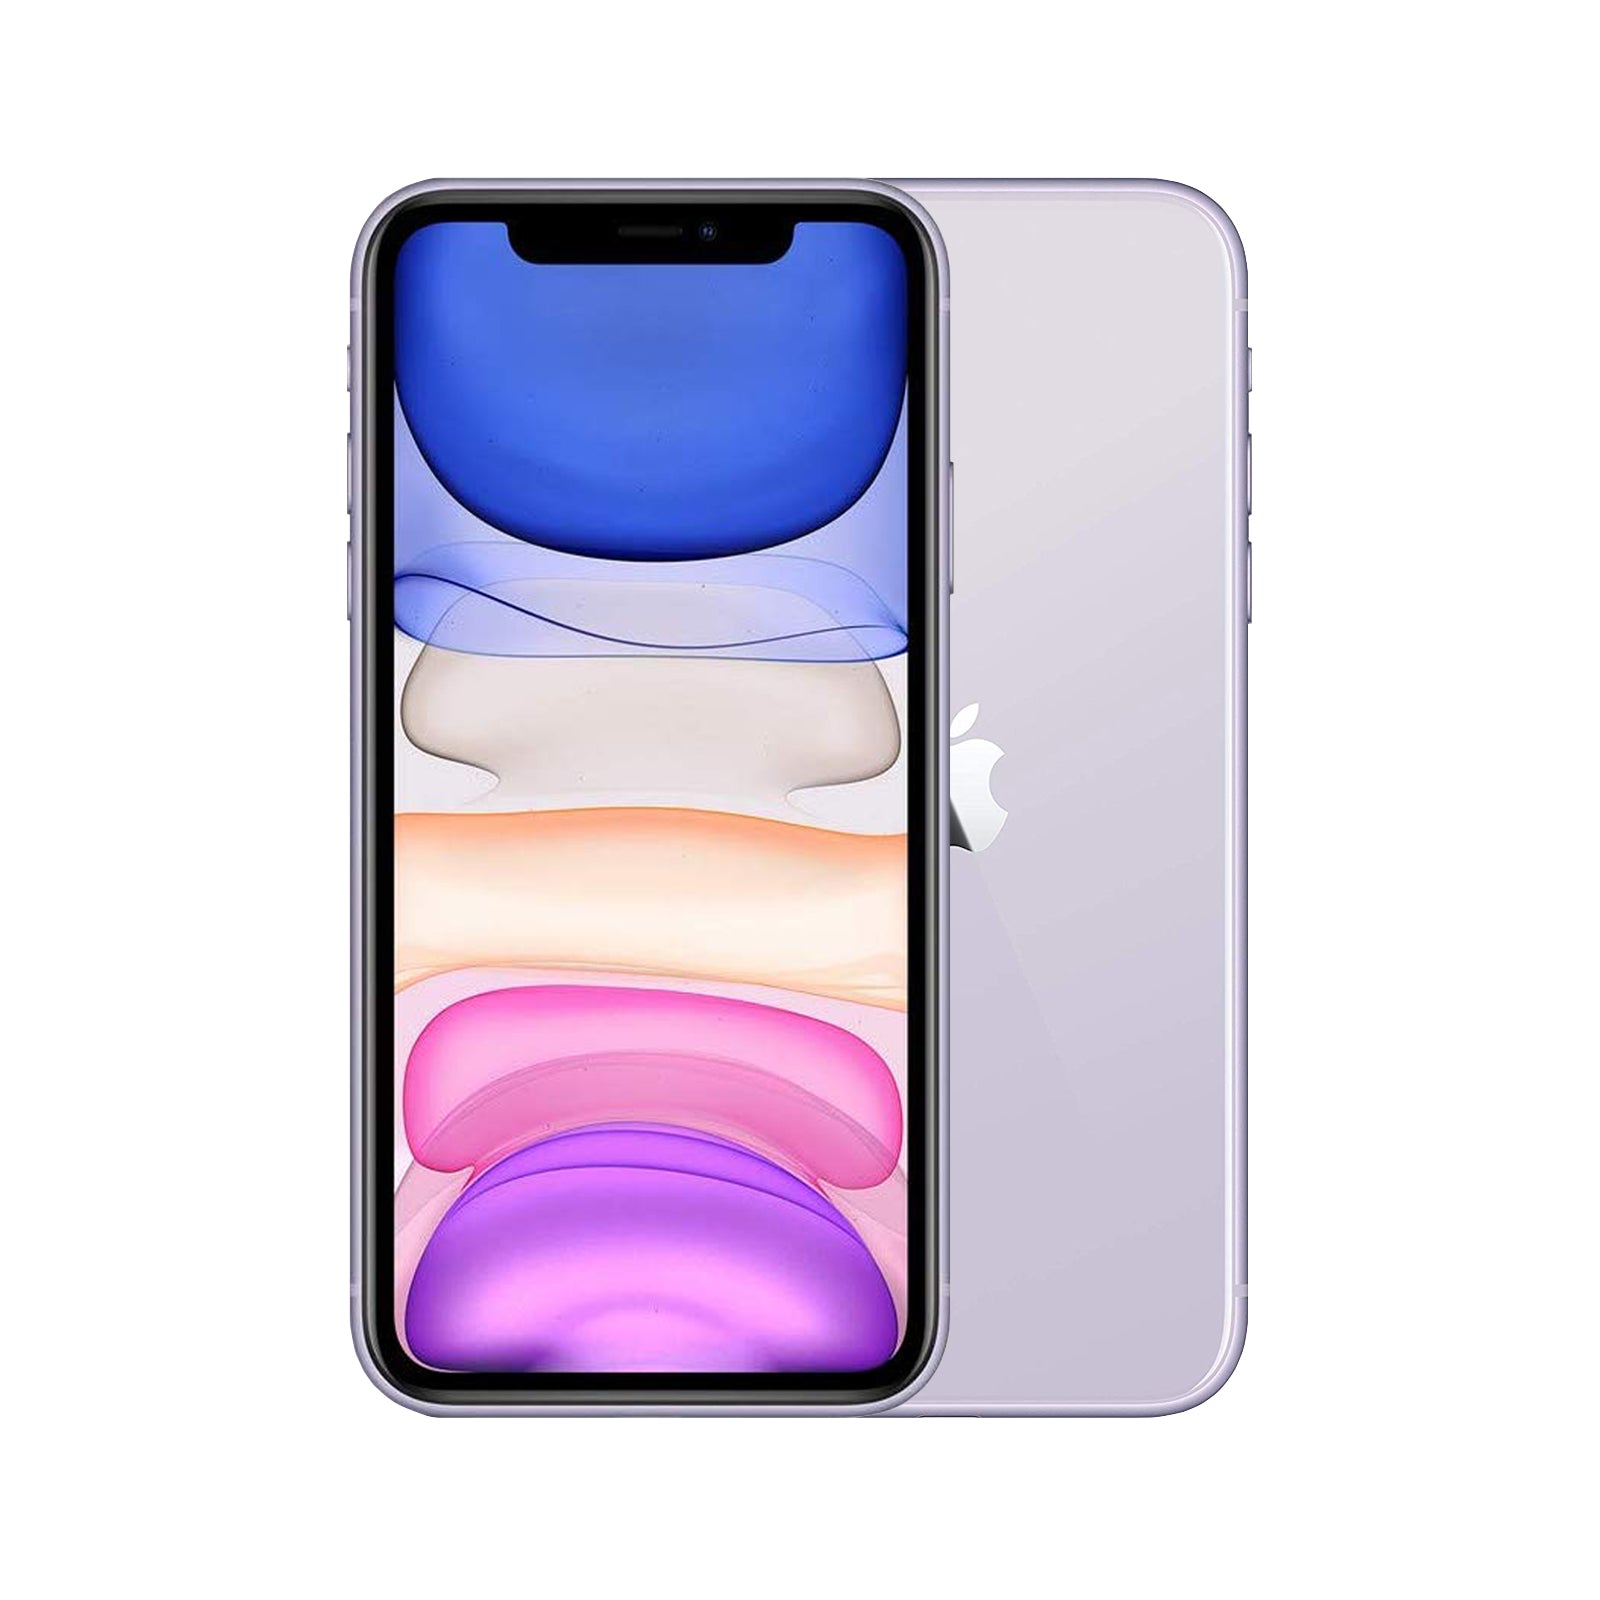 Apple iPhone 11 128GB Purple - Good - Refurbished